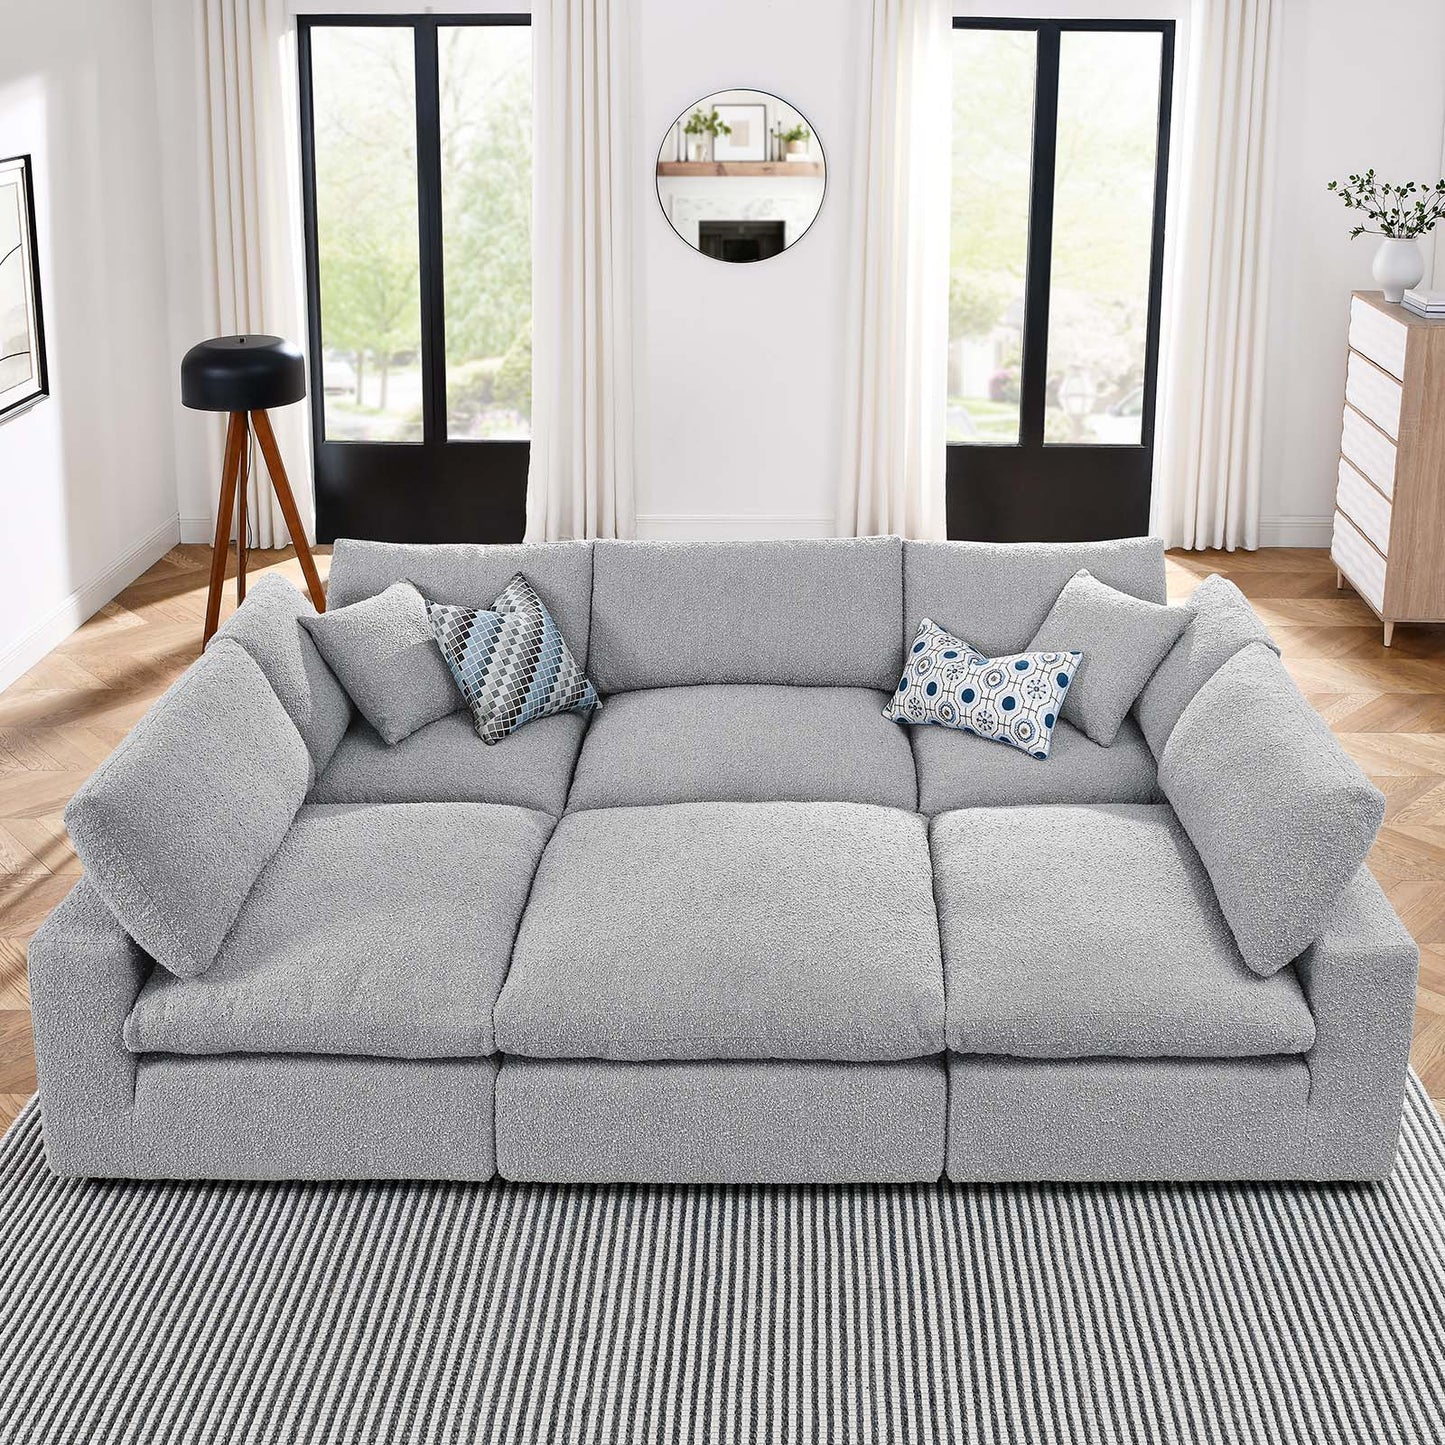 Commix Down Filled Overstuffed Boucle Fabric 6-Piece Sectional Sofa Light Gray EEI-6372-LGR